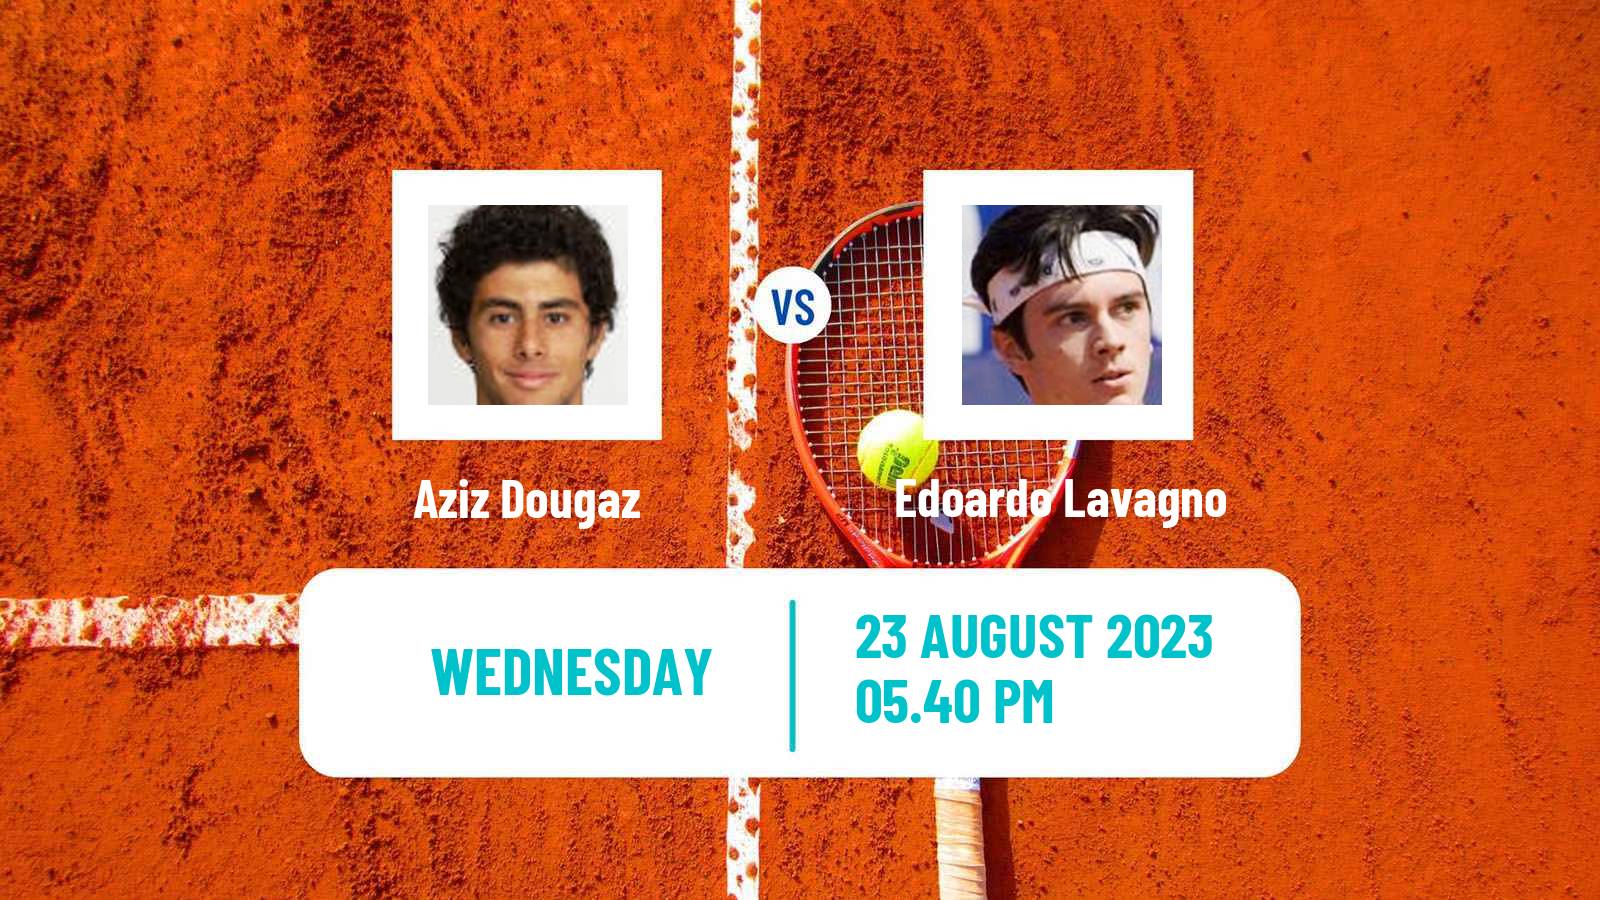 Tennis ATP US Open Aziz Dougaz - Edoardo Lavagno